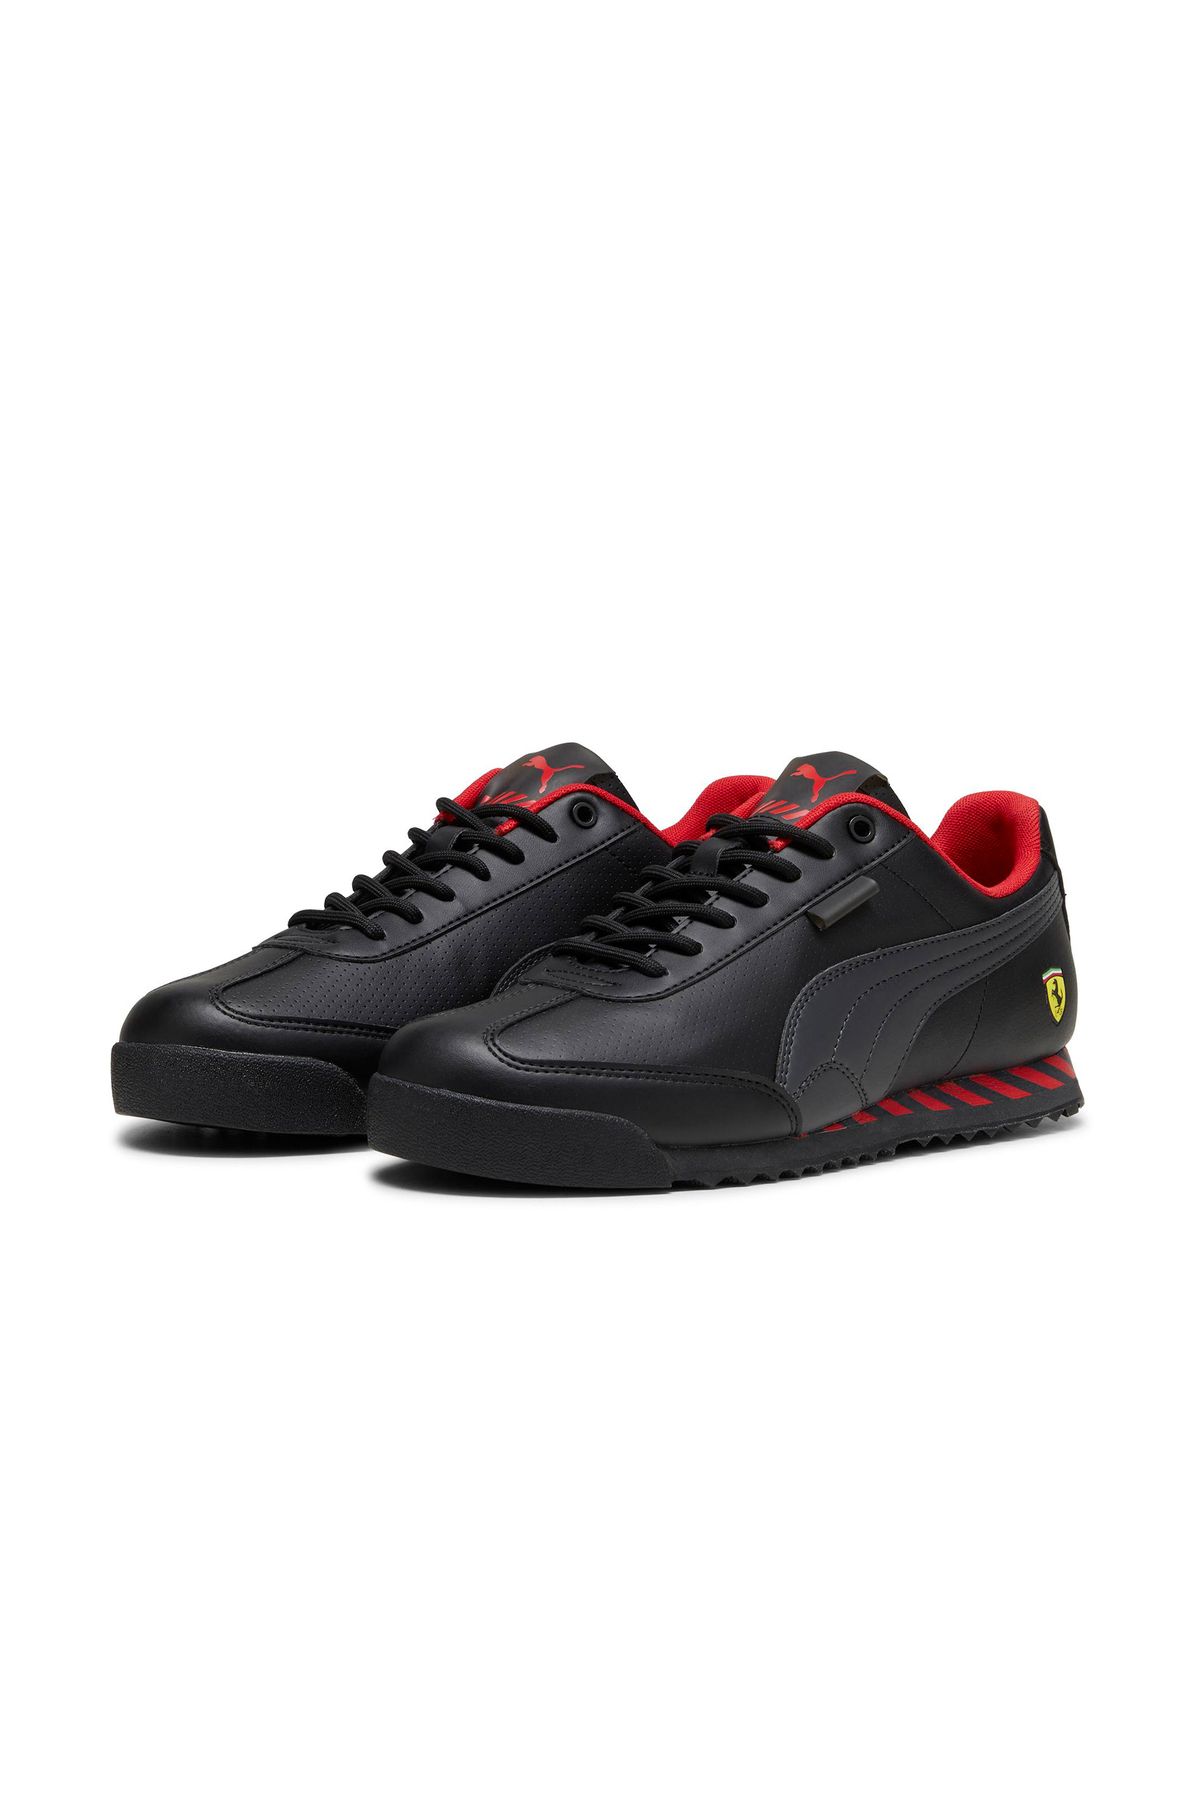 Puma Ferrari Roma Via Günlük Ayakkabı Sneaker Siyah